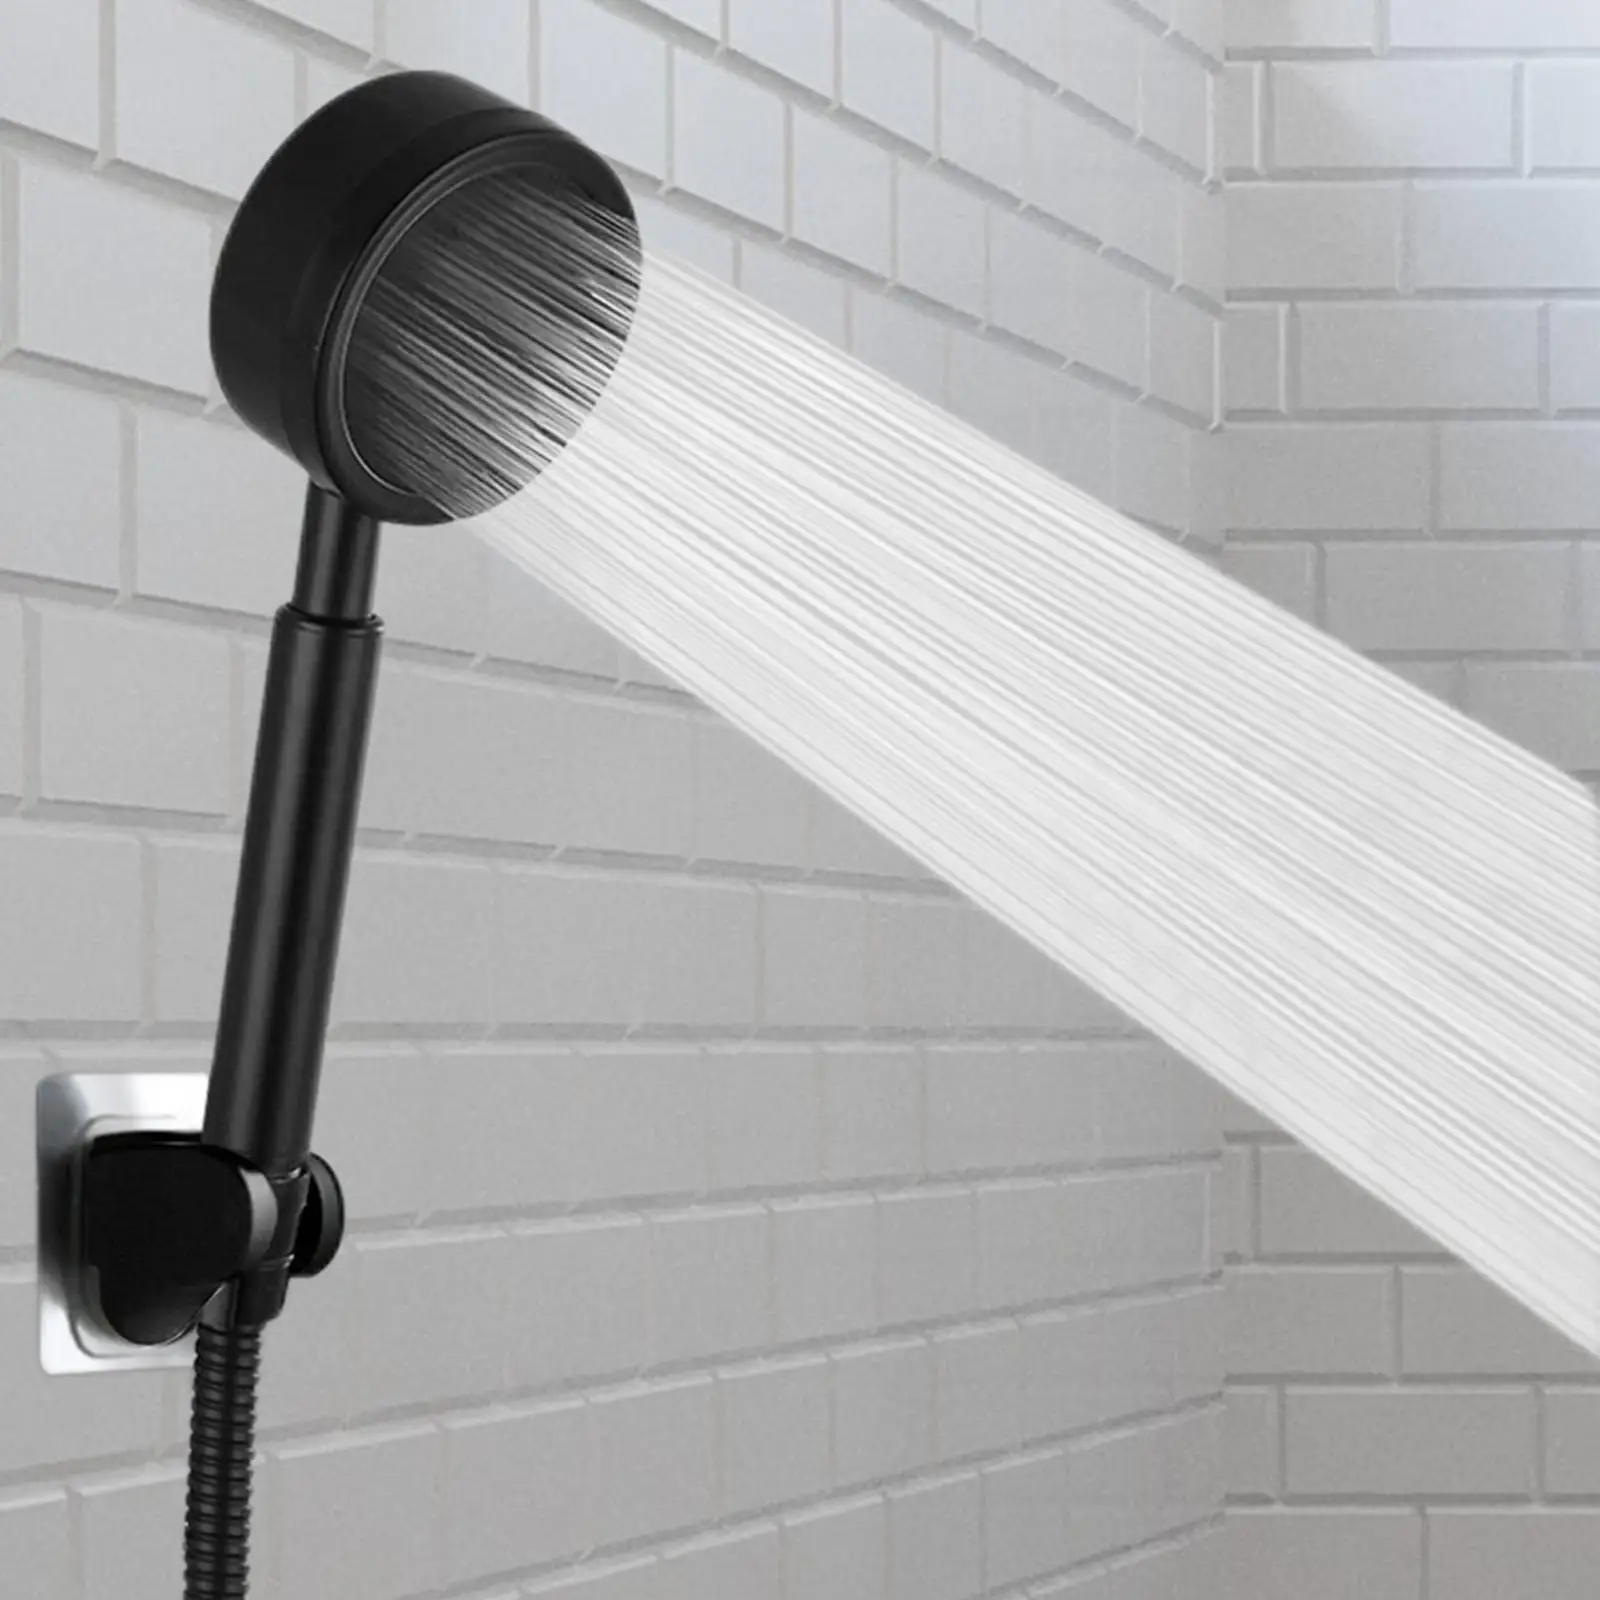 High Pressure Shower Heads Handheld Spray Bathroom Water Saving Wall Mount Detachable Spraying Head for Massage Shower SPA Club